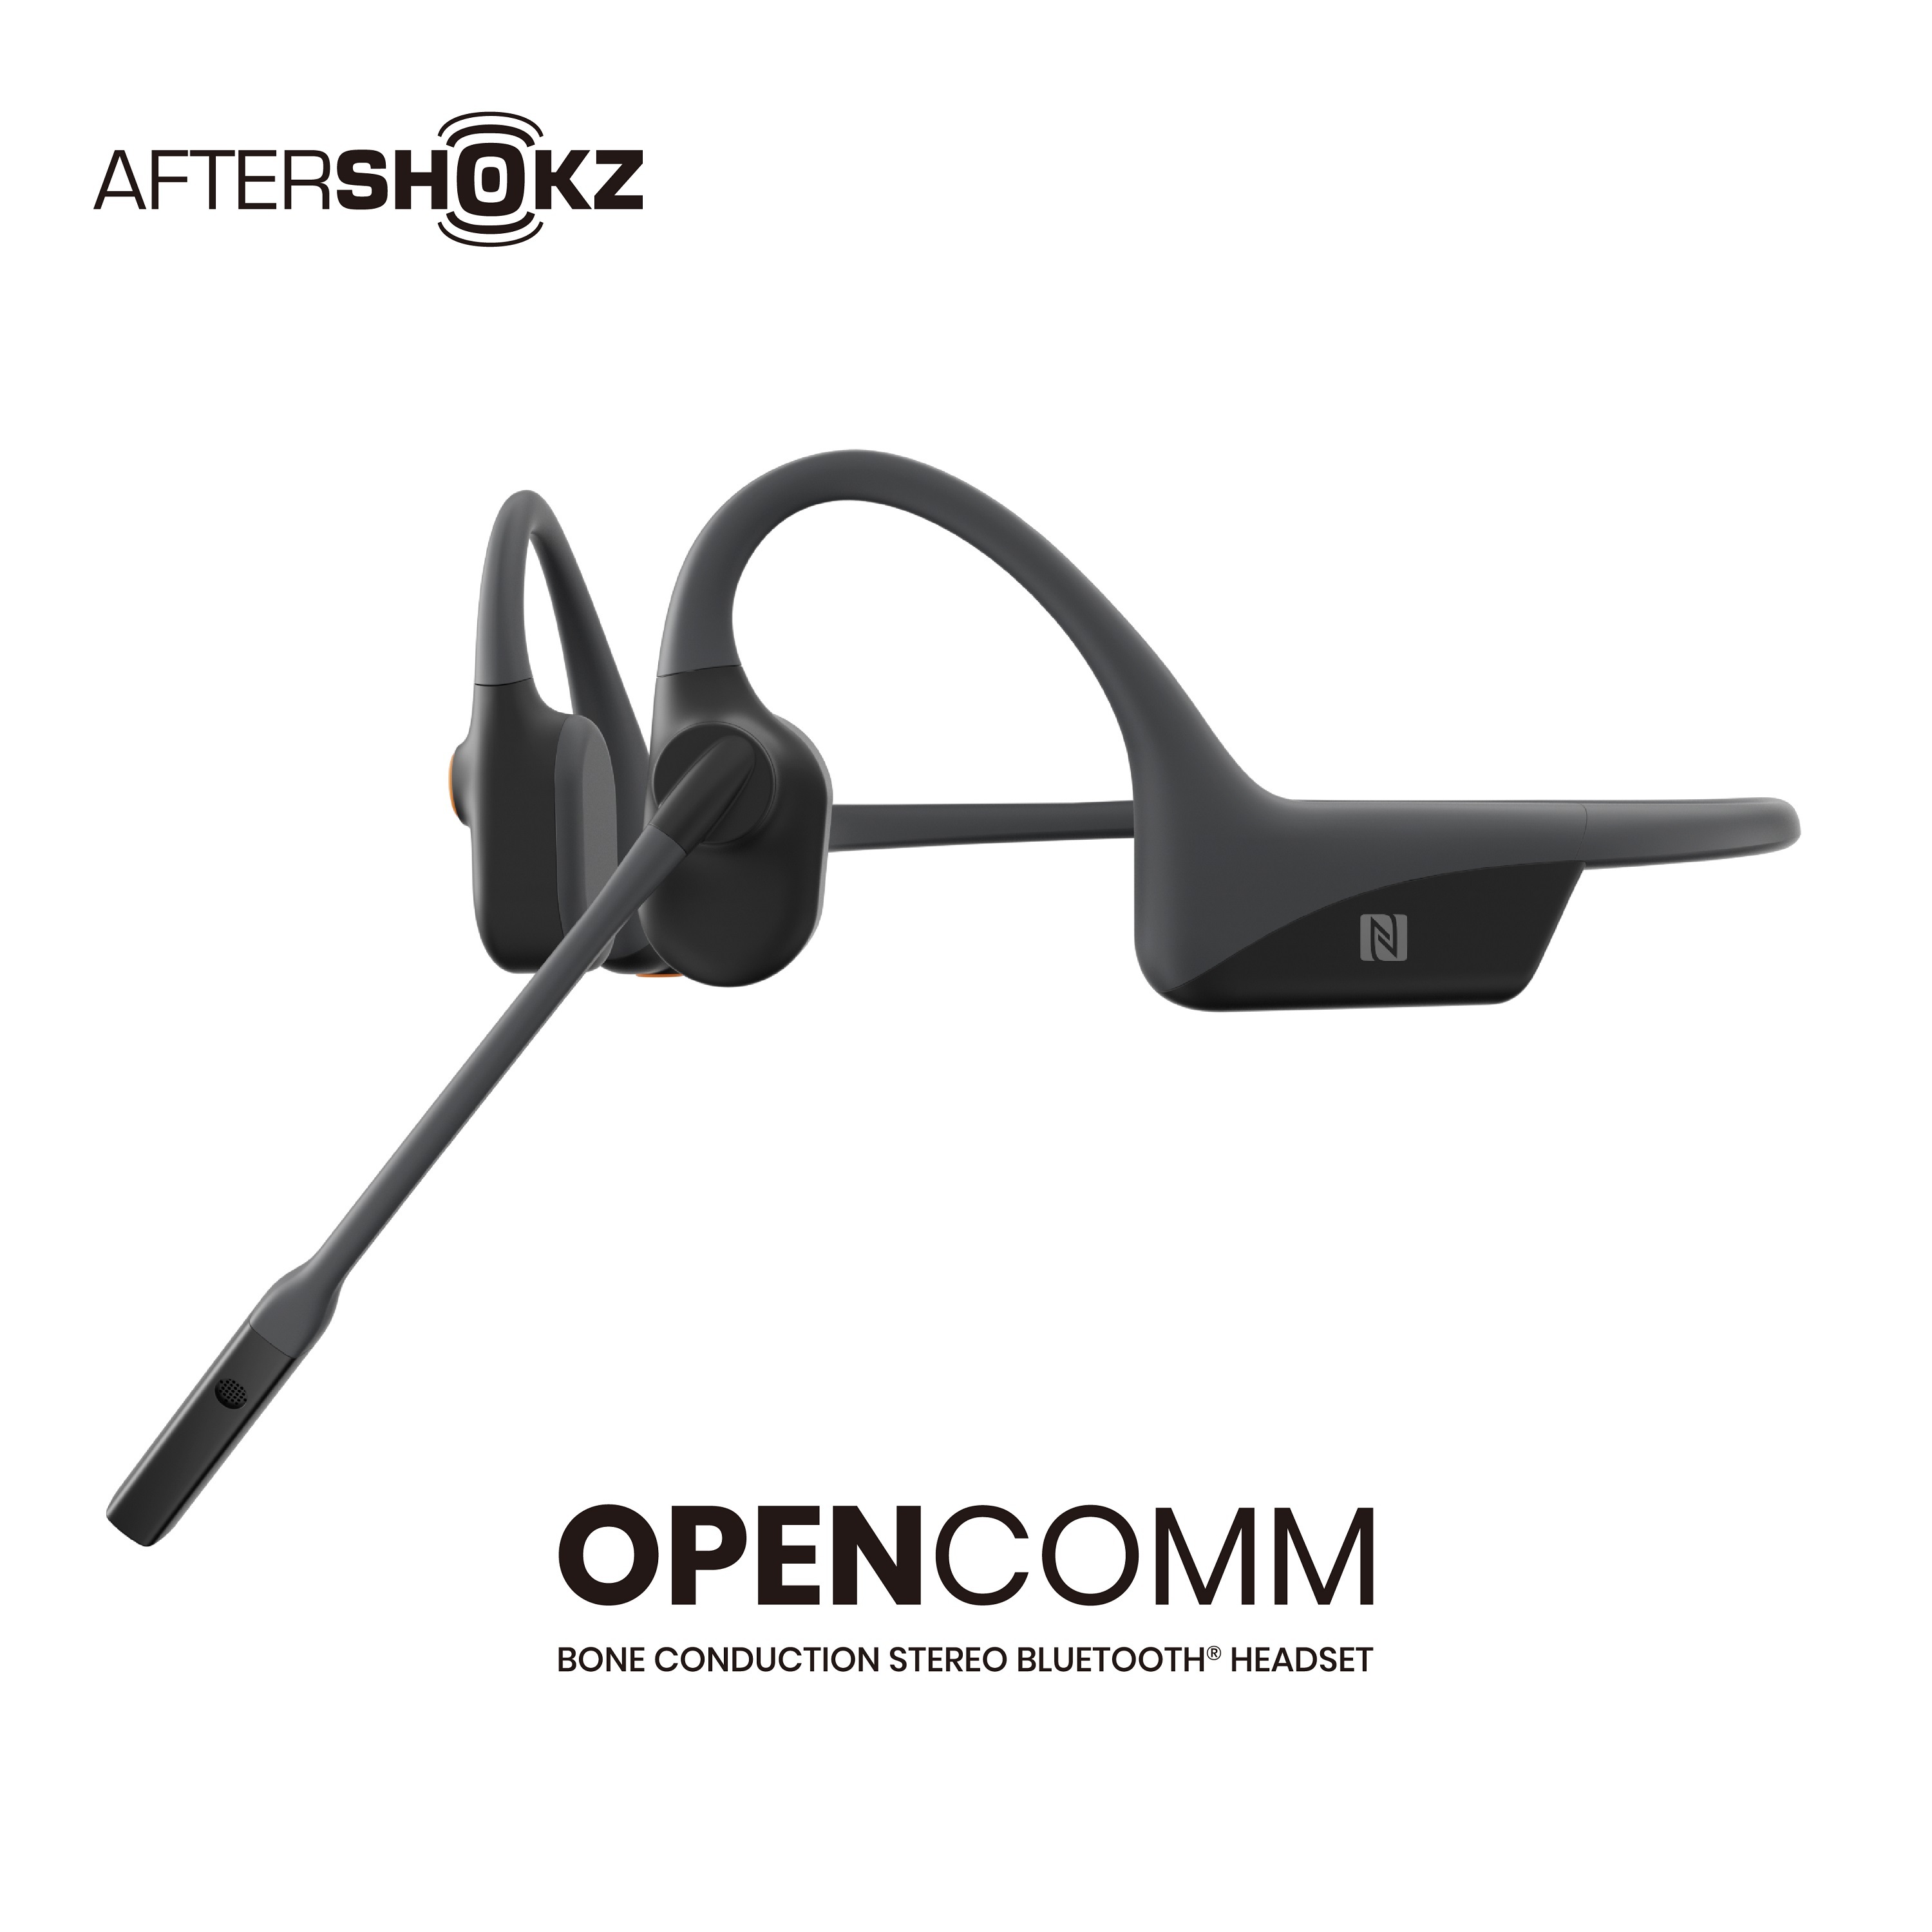 iF Design - Aftershokz OpenComm Bone Conduction Headset